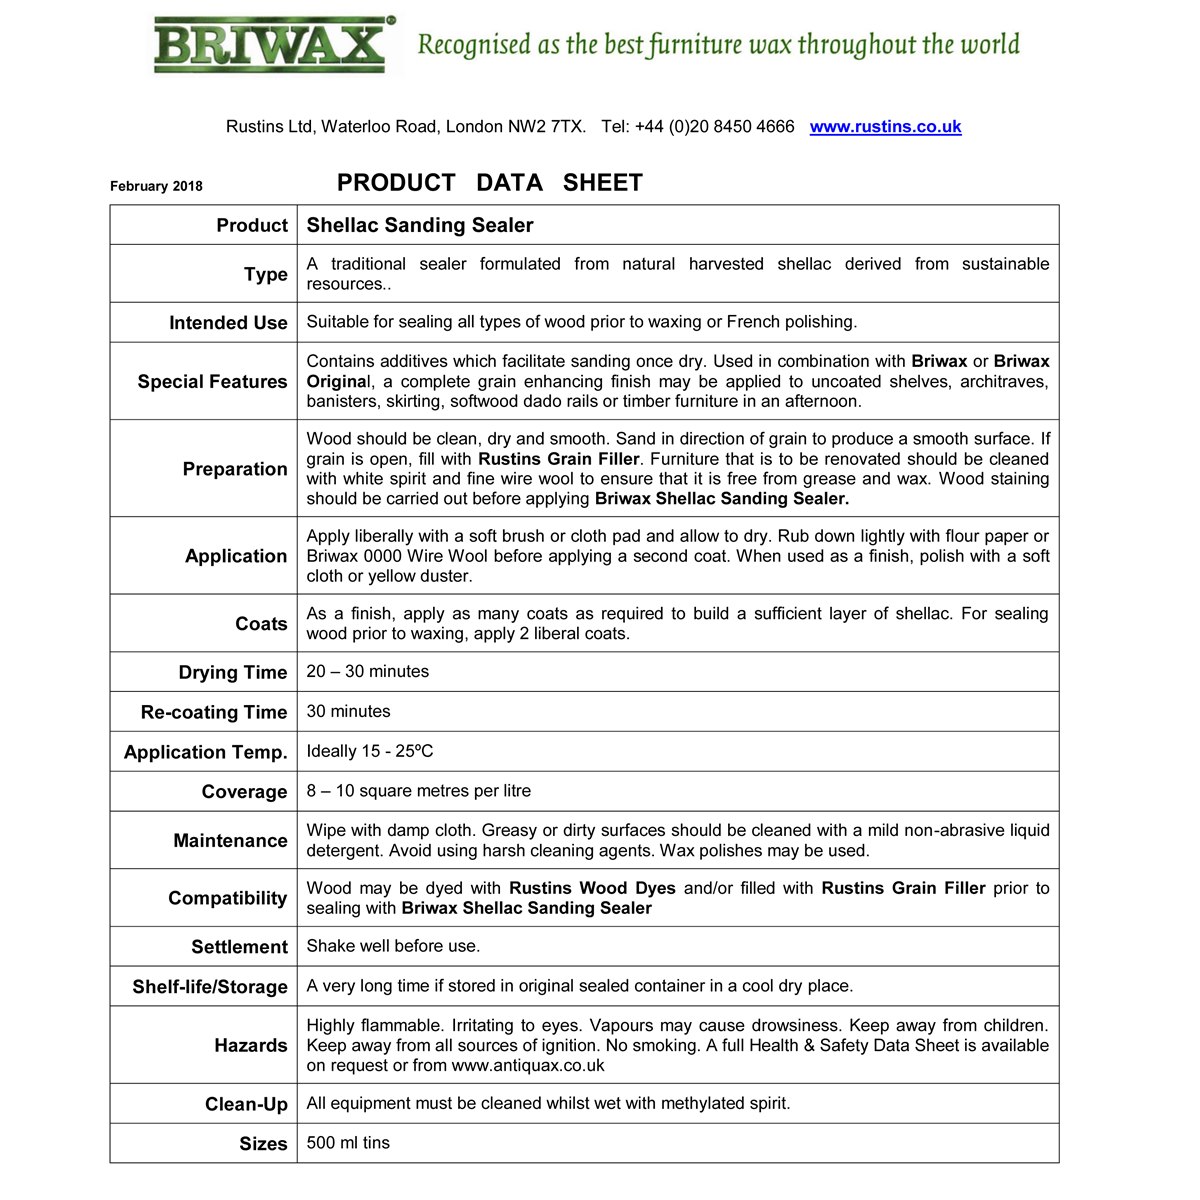 Briwax Shellac Sanding Sealer Product Data Sheet